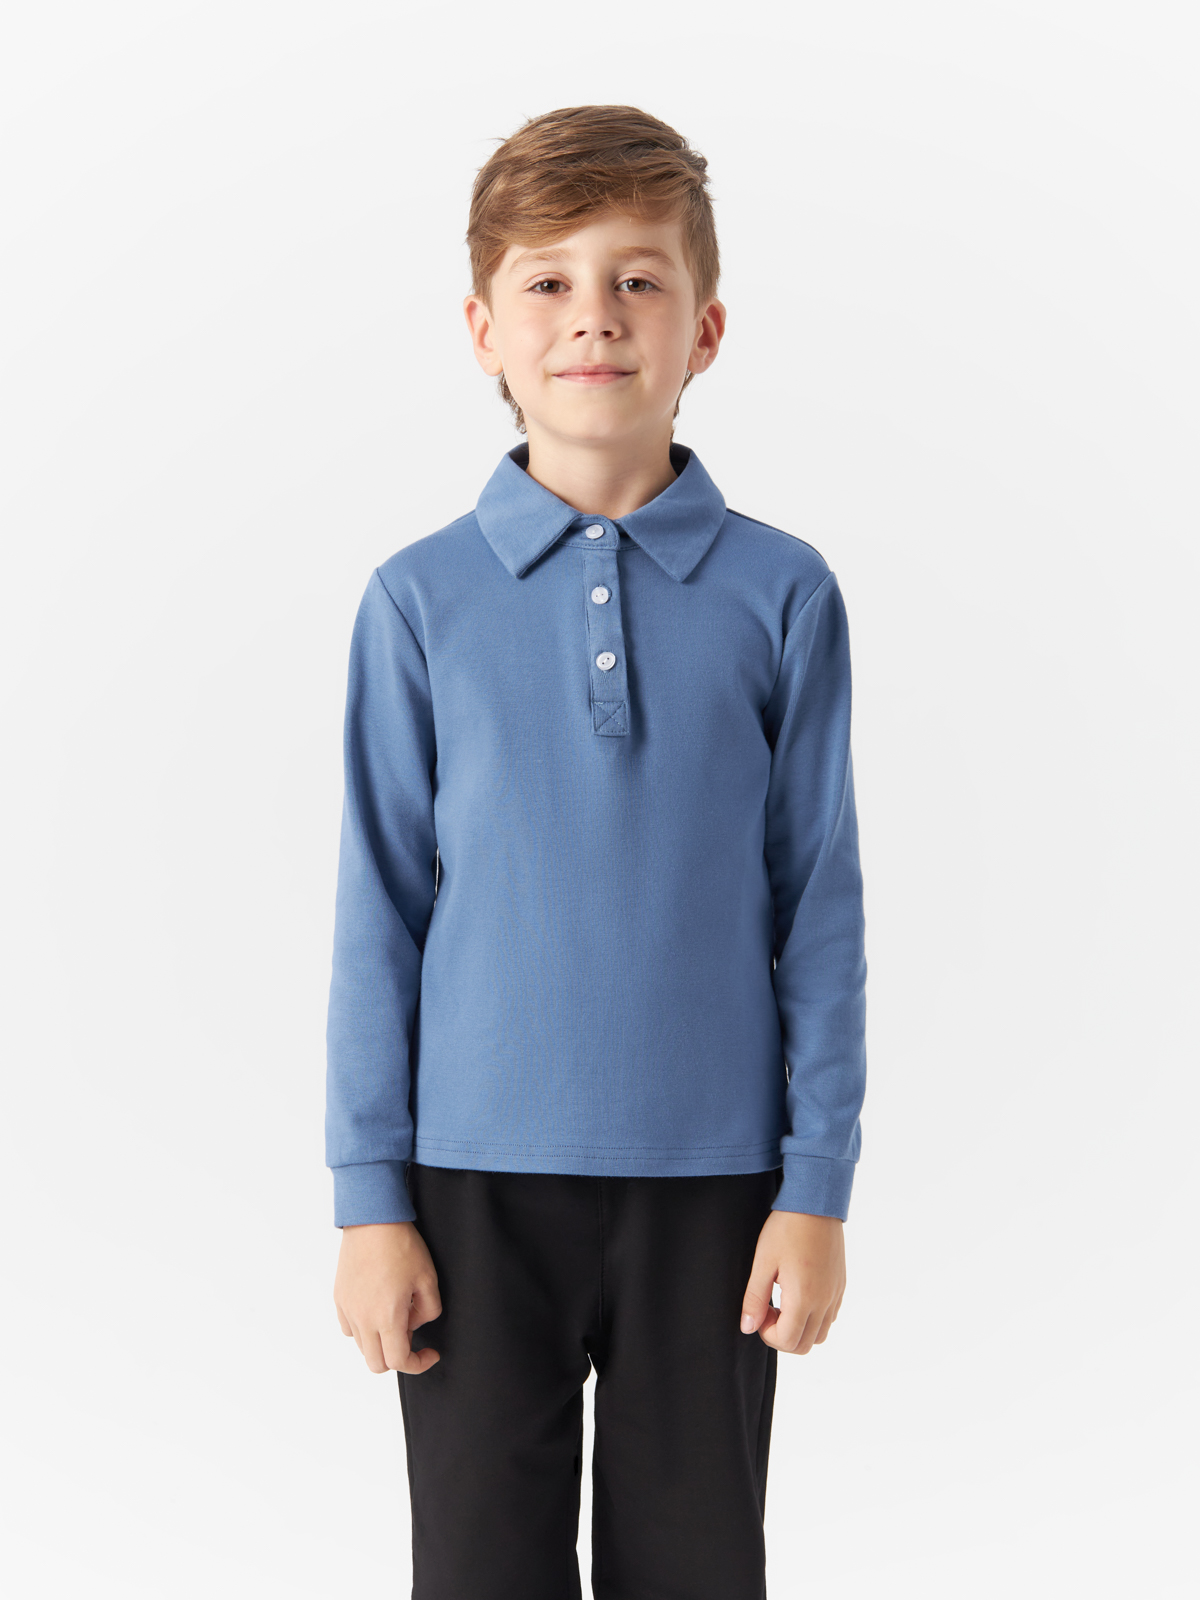 Рубашка Yiwu Xflot Supply Chain детская, BS-8blue, размер 130 см